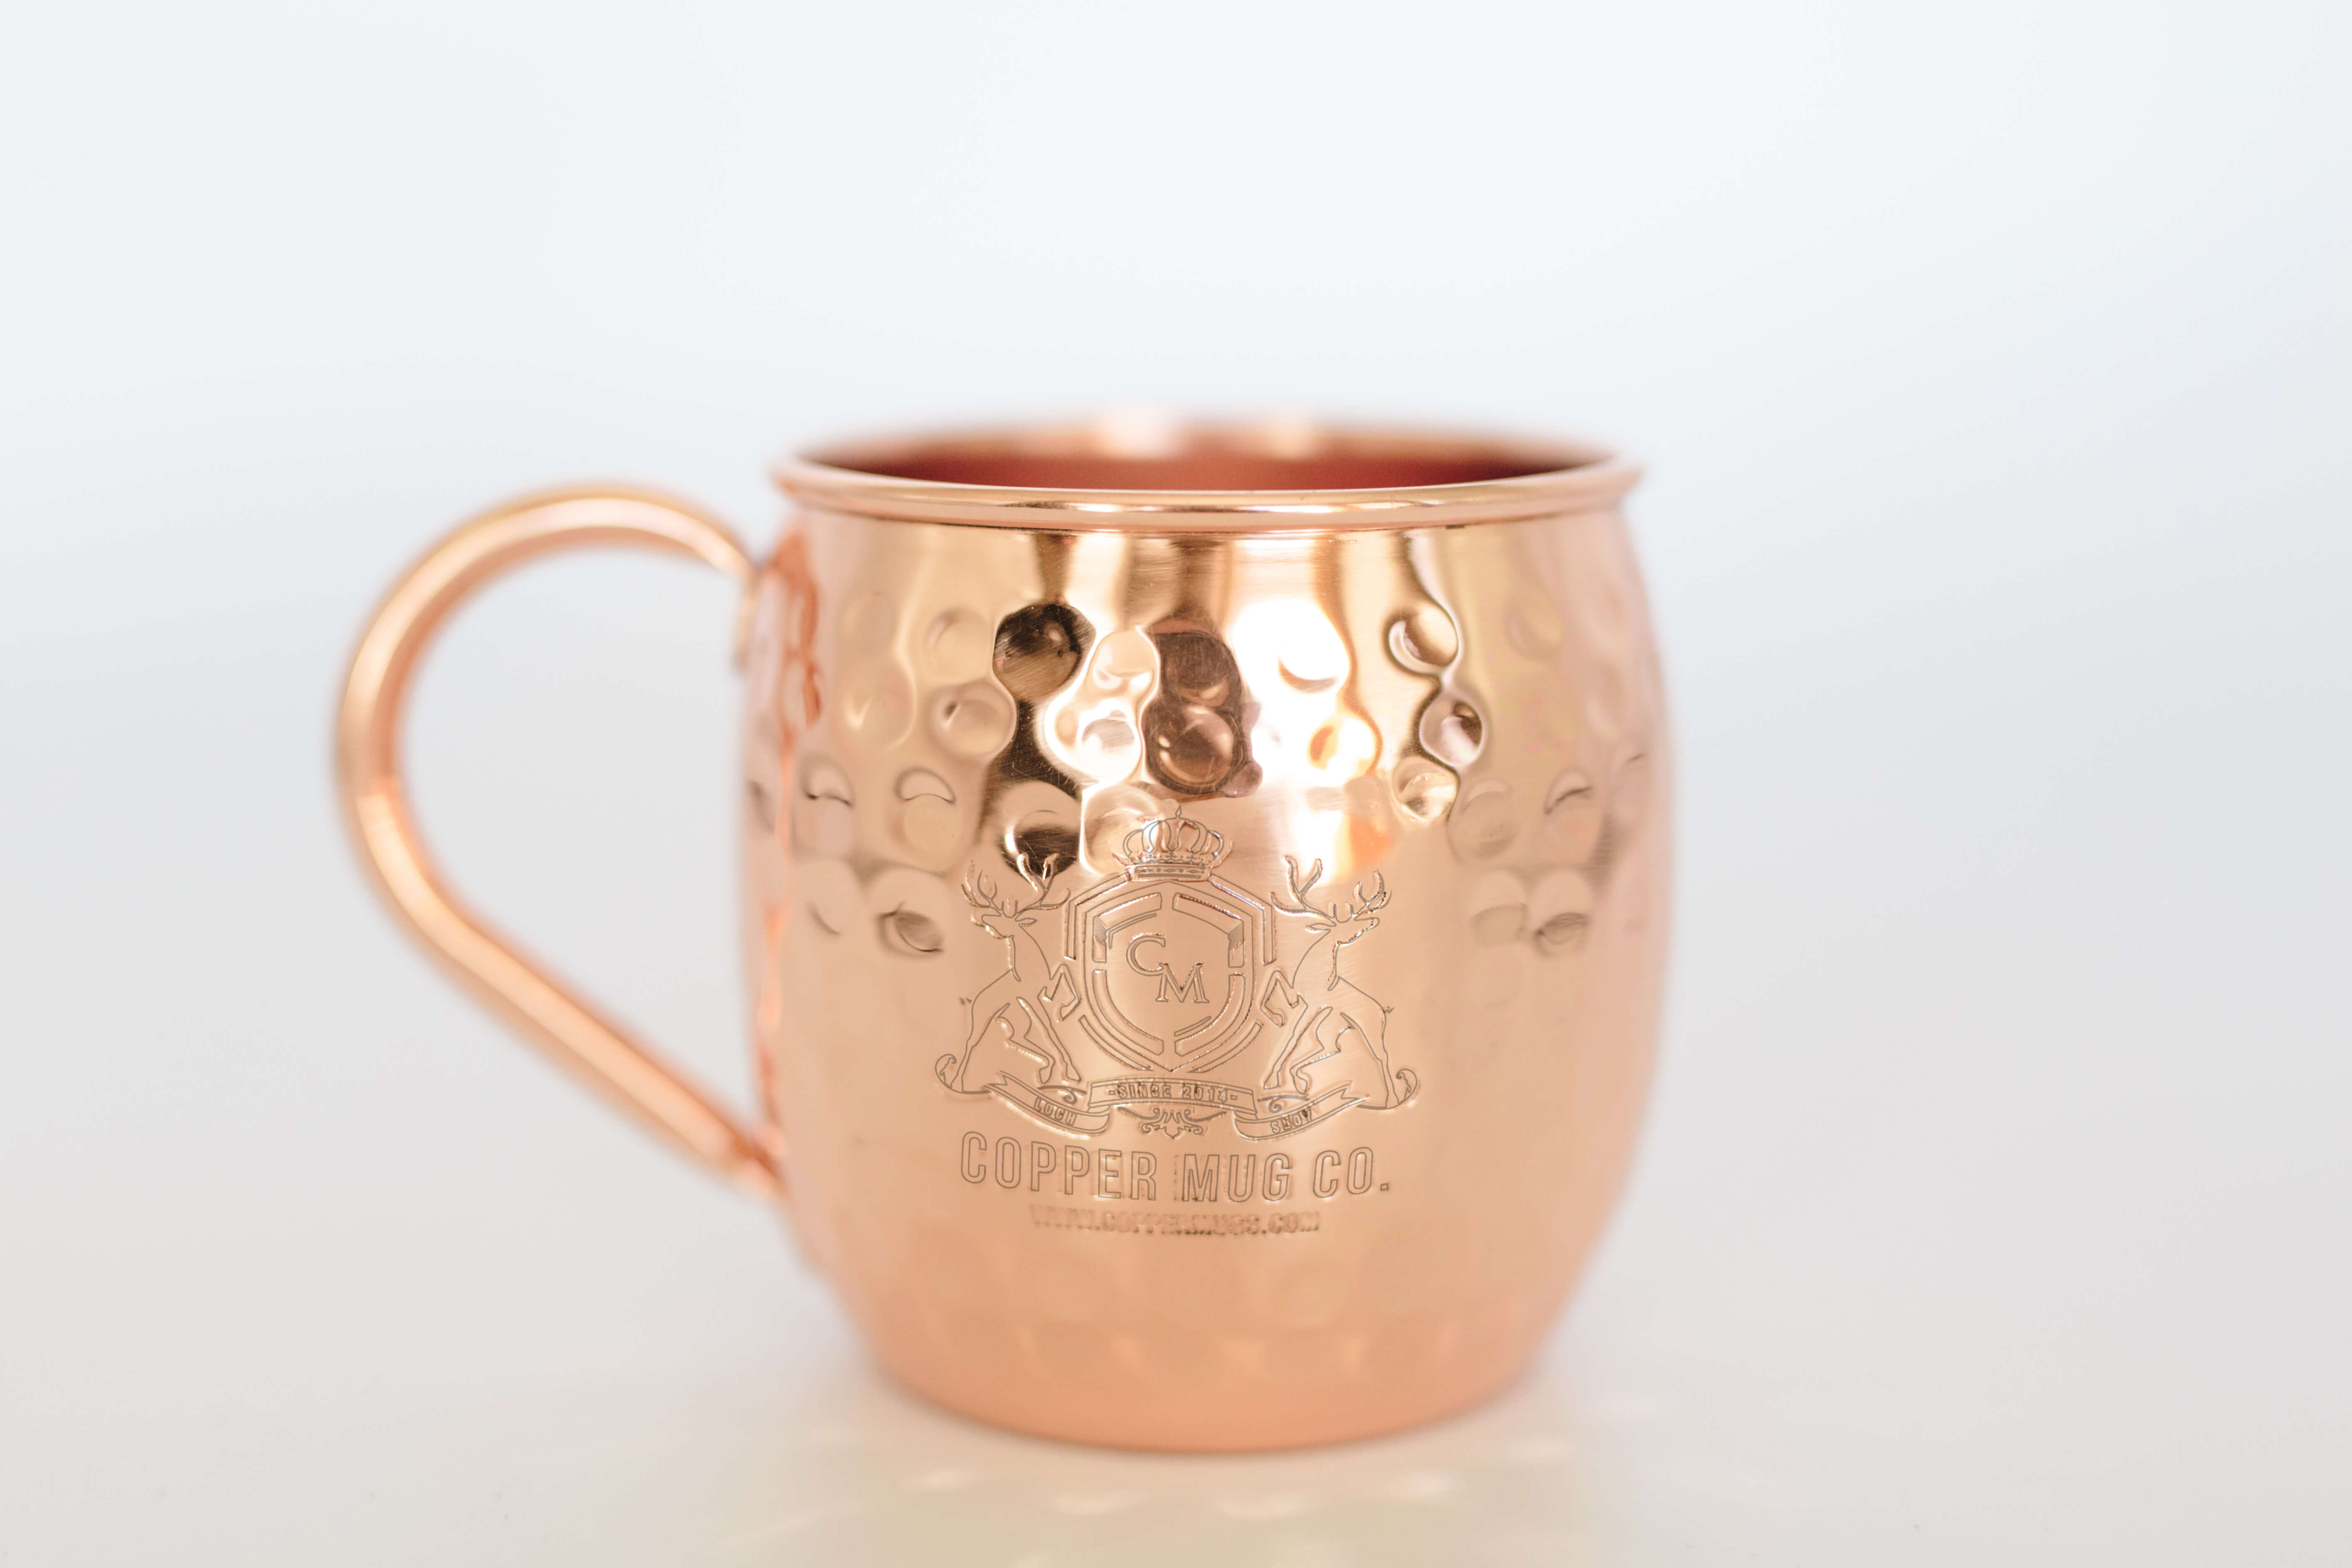 Copper Mugs May 2019  23